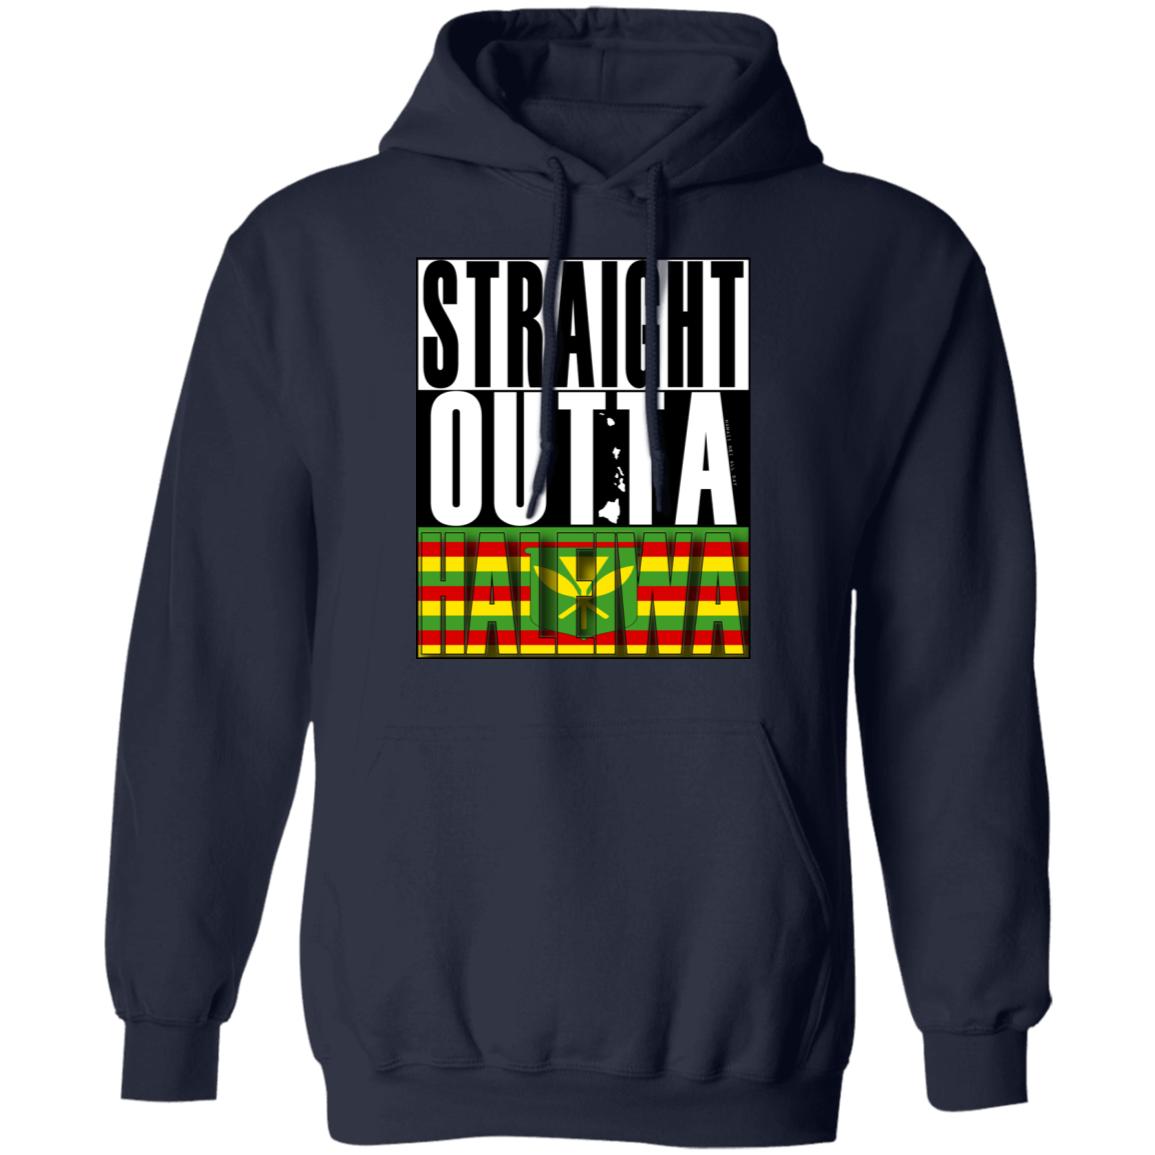 Straight Outta Haleiwa(Kanaka Maoli) Pullover Hoodie, Sweatshirts, Hawaii Nei All Day